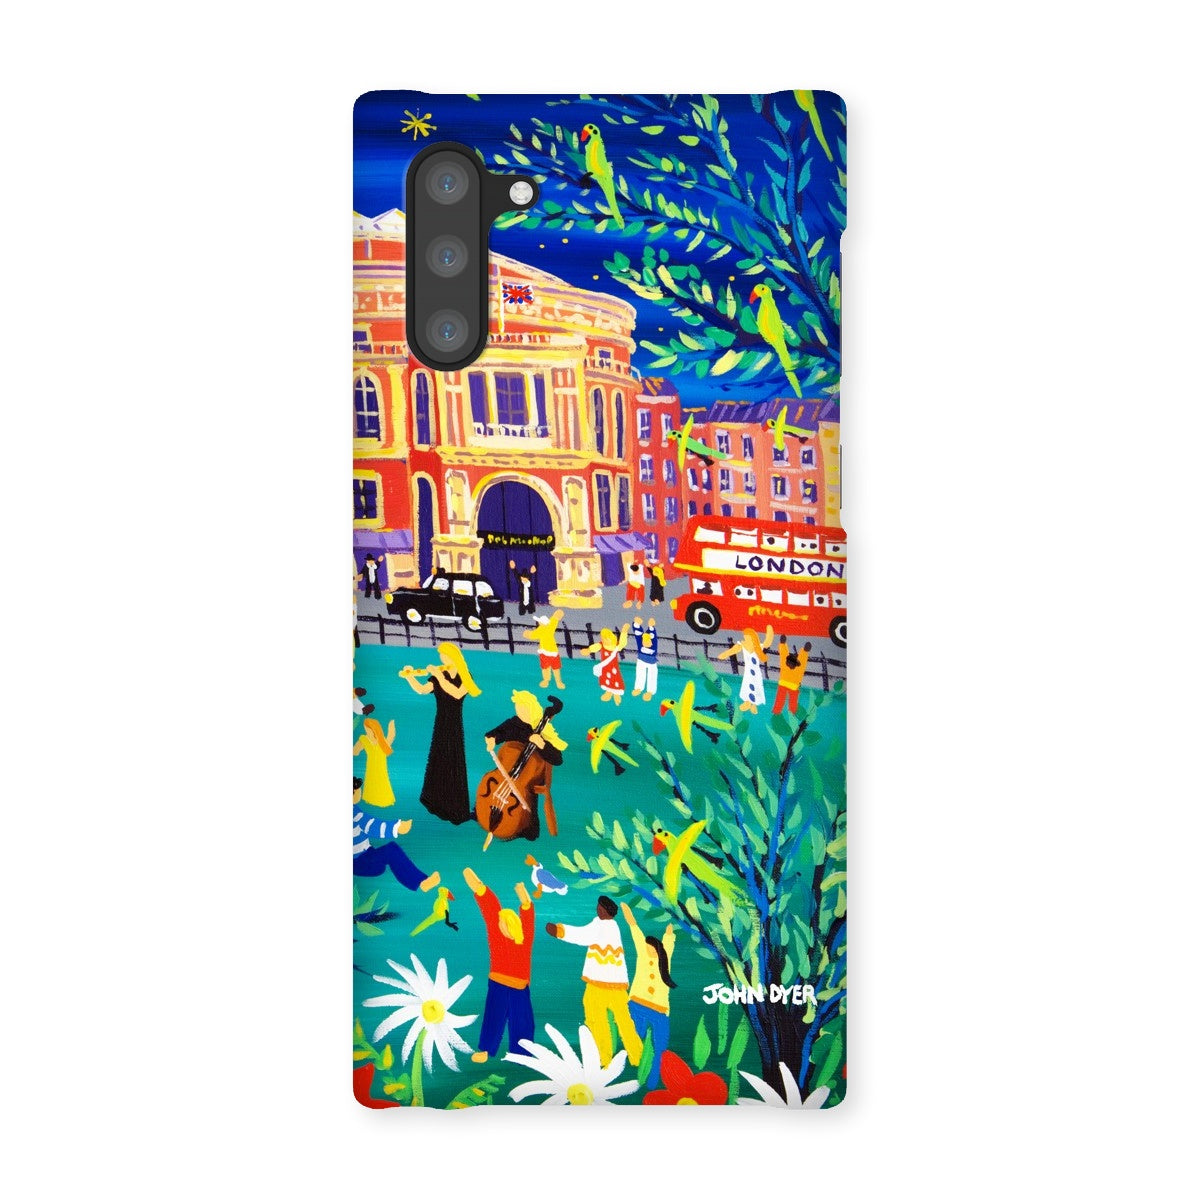 Snap Art Phone Case. Royal Albert Hall, Hyde park, London. Musicians. Artist John Dyer. Cornwall Art Gallery